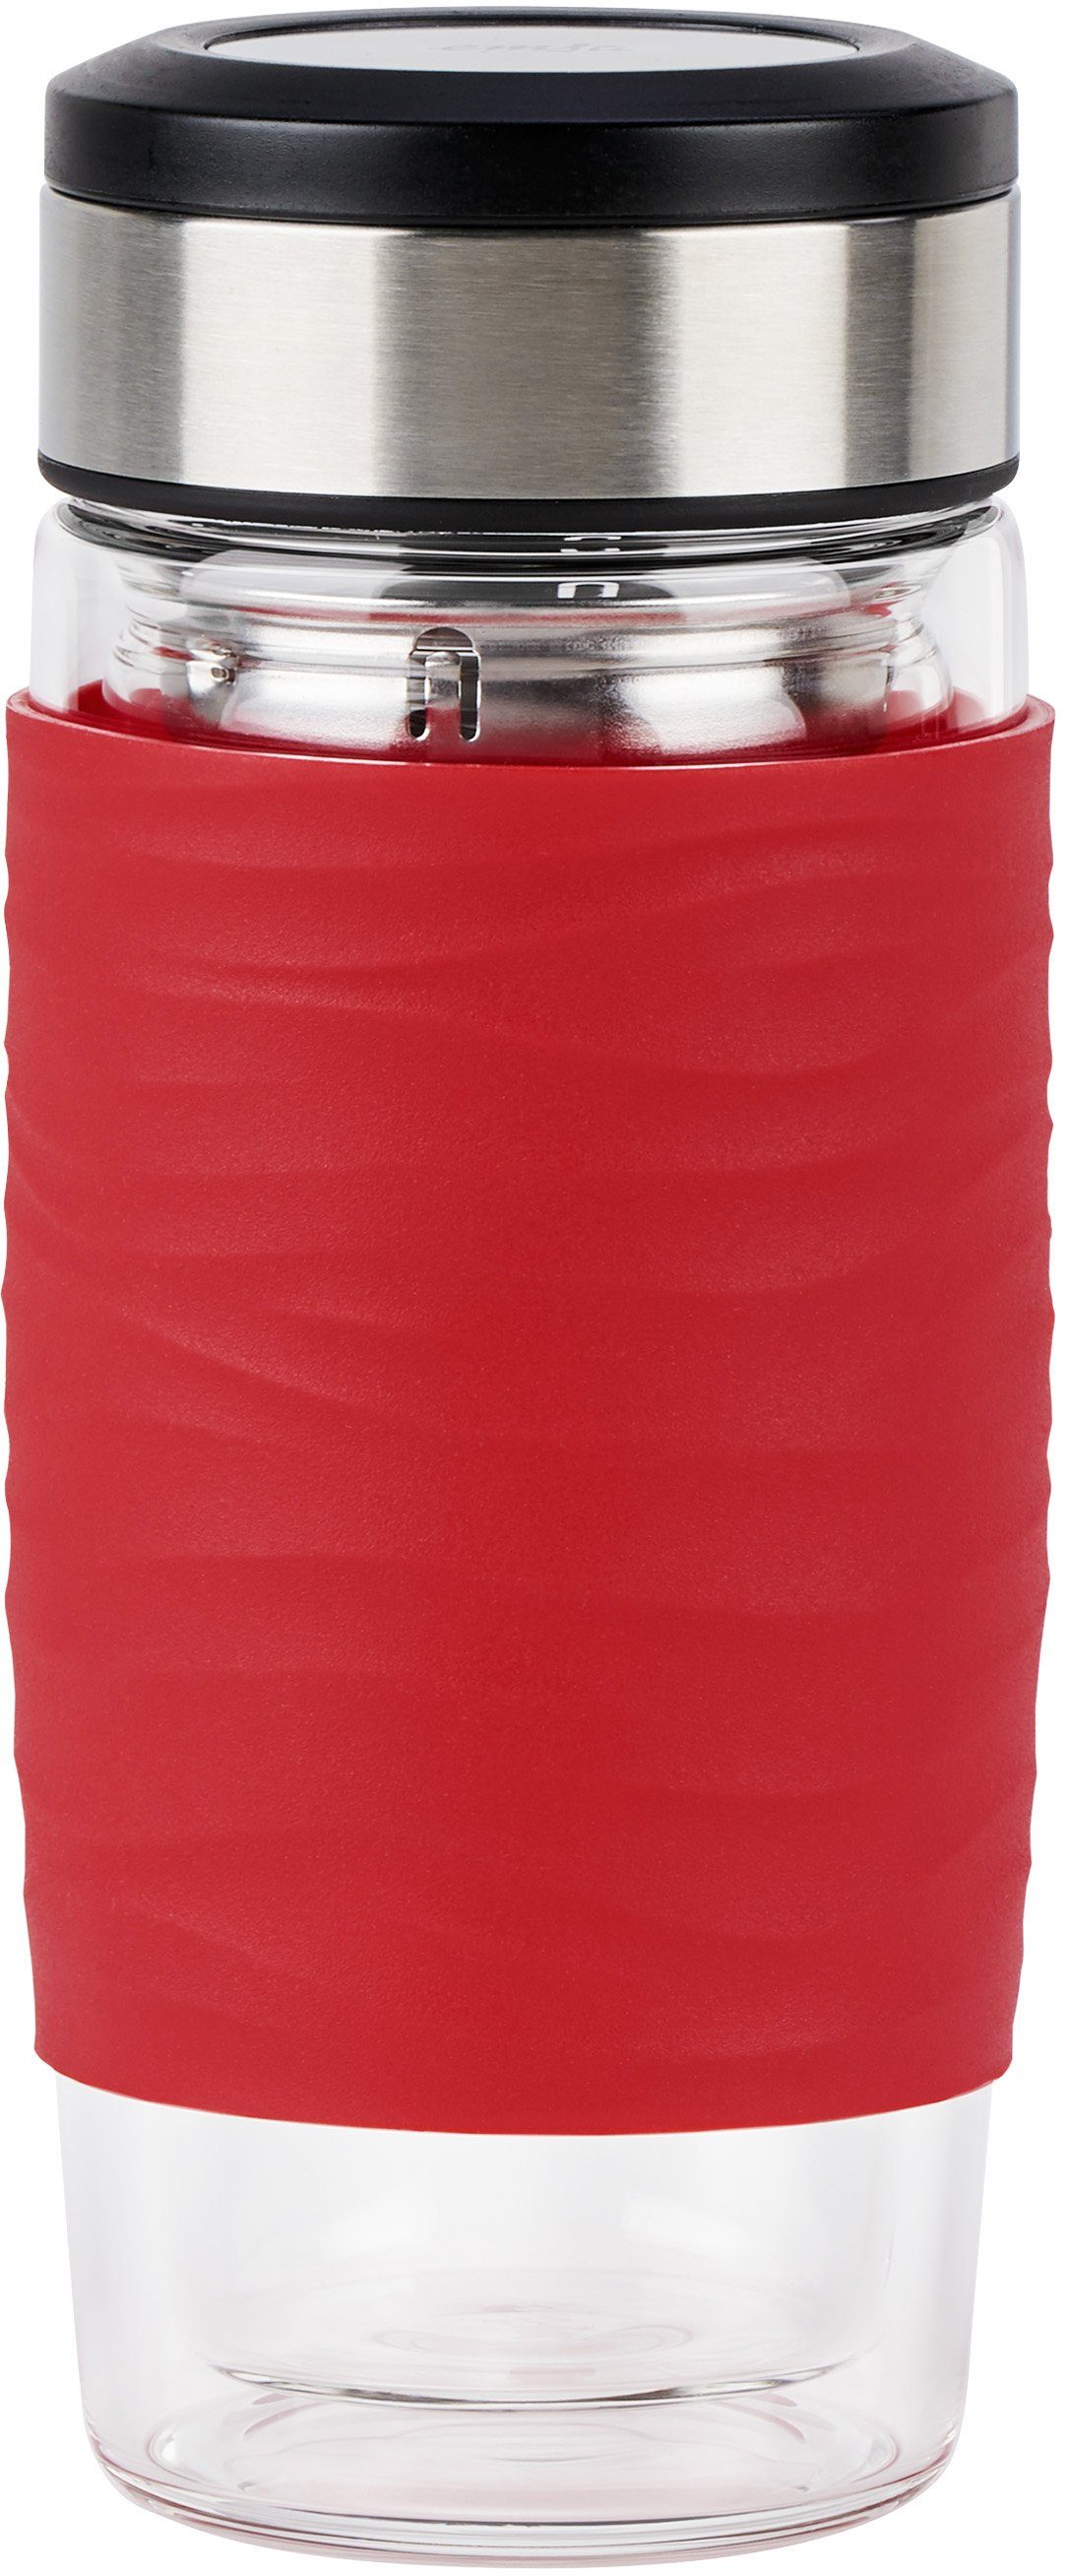 Emsa Thermobecher Tea Mug, Edelstahl, Glas, Silikon, Teebecher, 400 ml, 100% dicht, 3-teilig, mit herausnehmbarem Tee-Sieb rot/edelstahlfarben/transparent